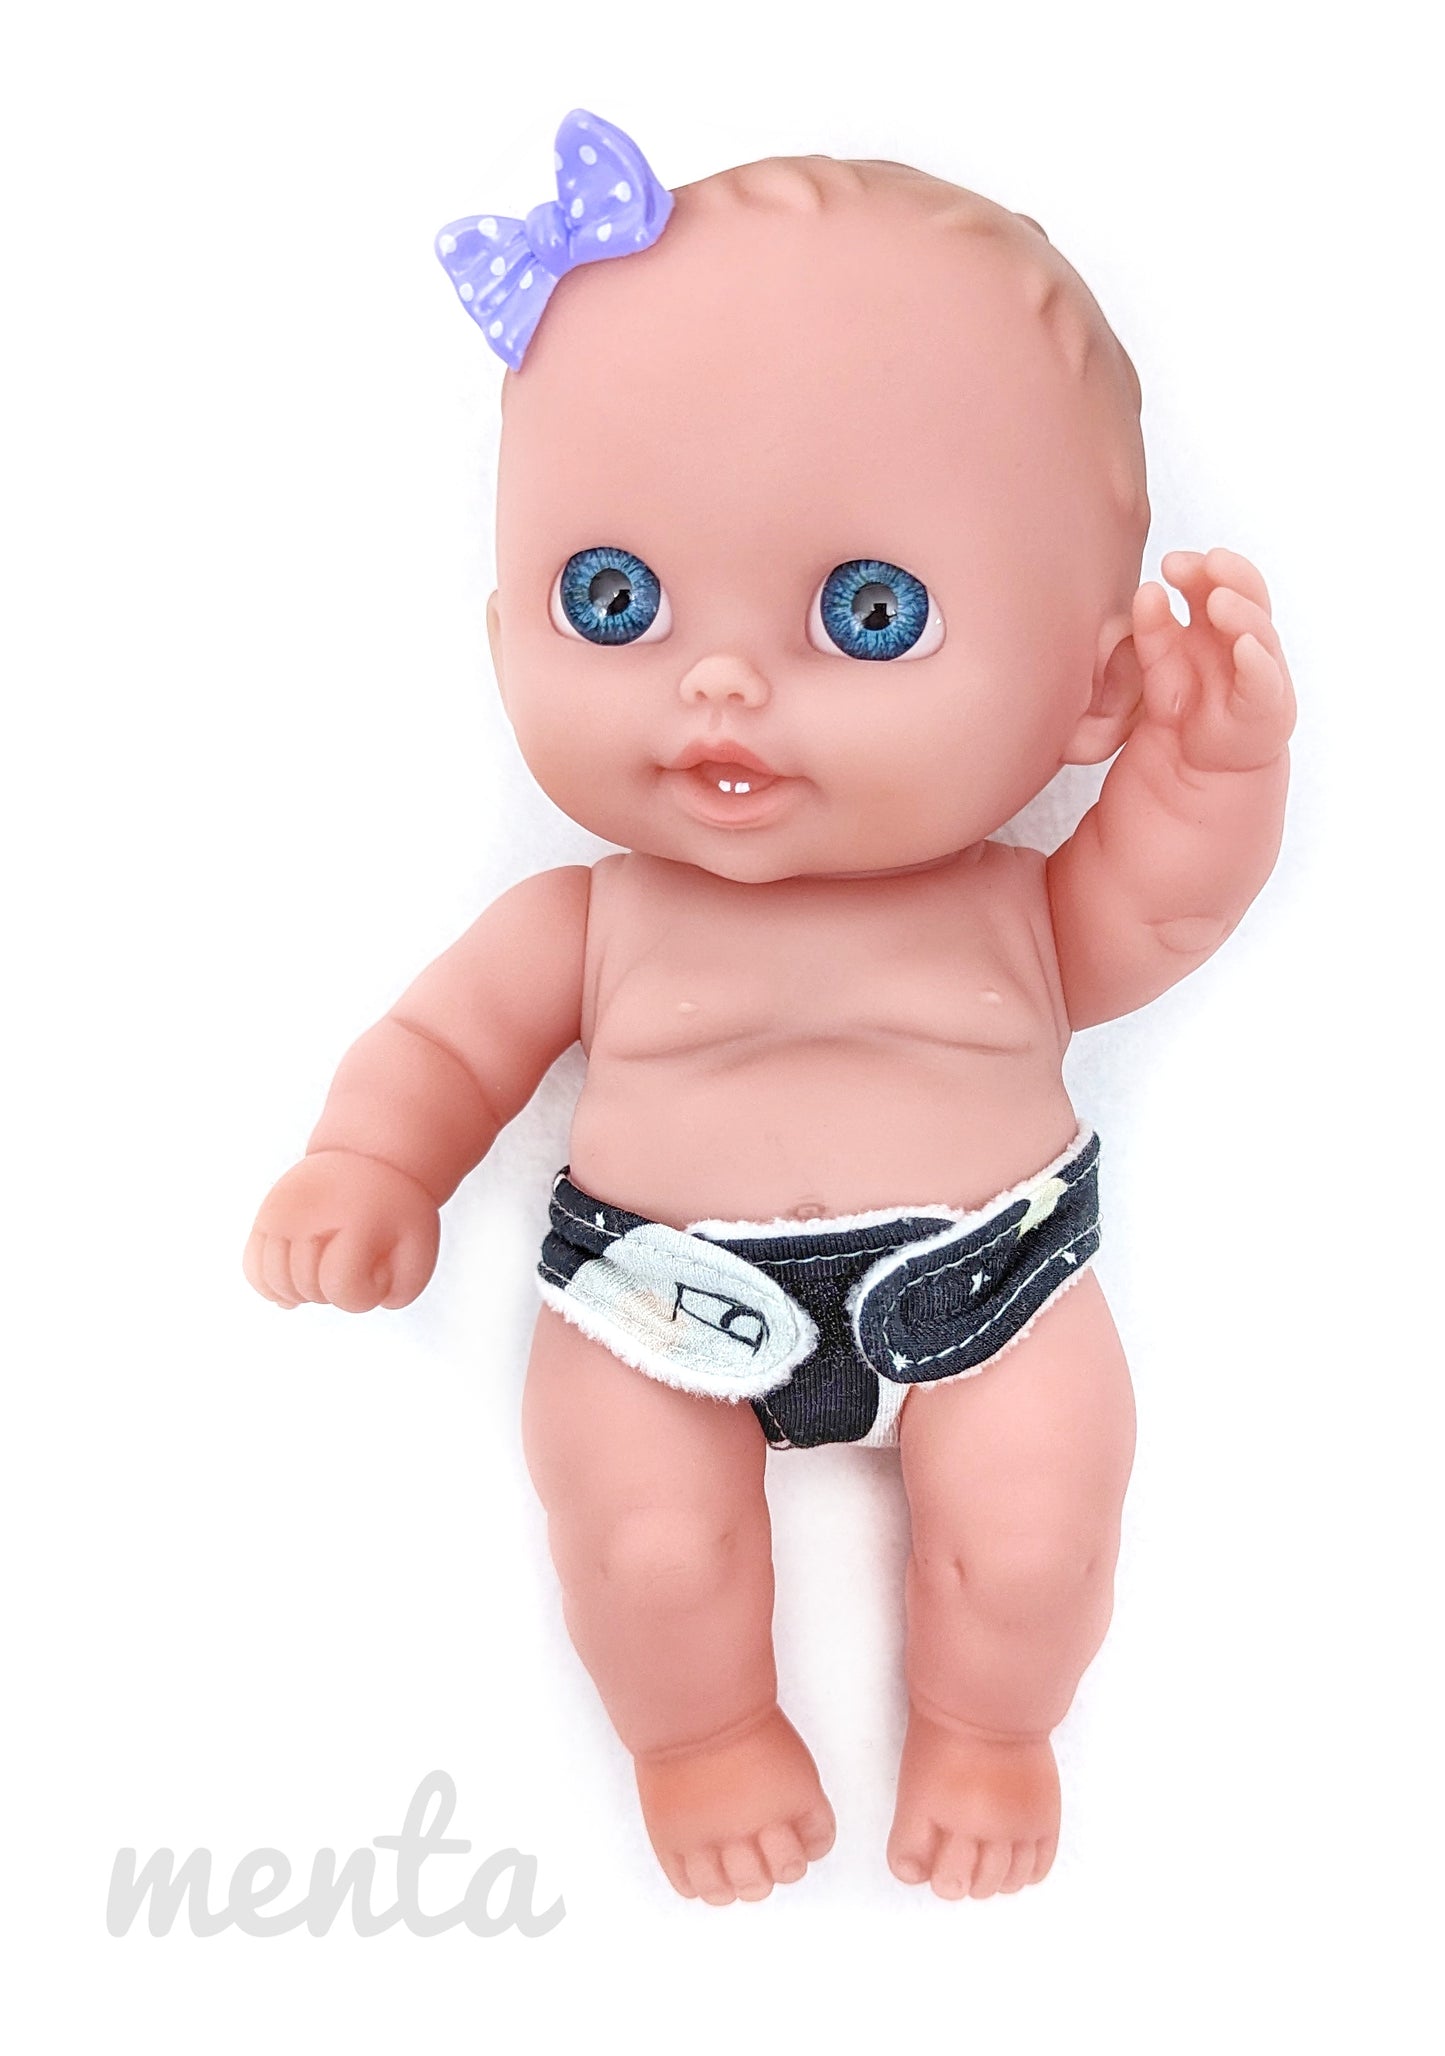 Diaper 8" Doll